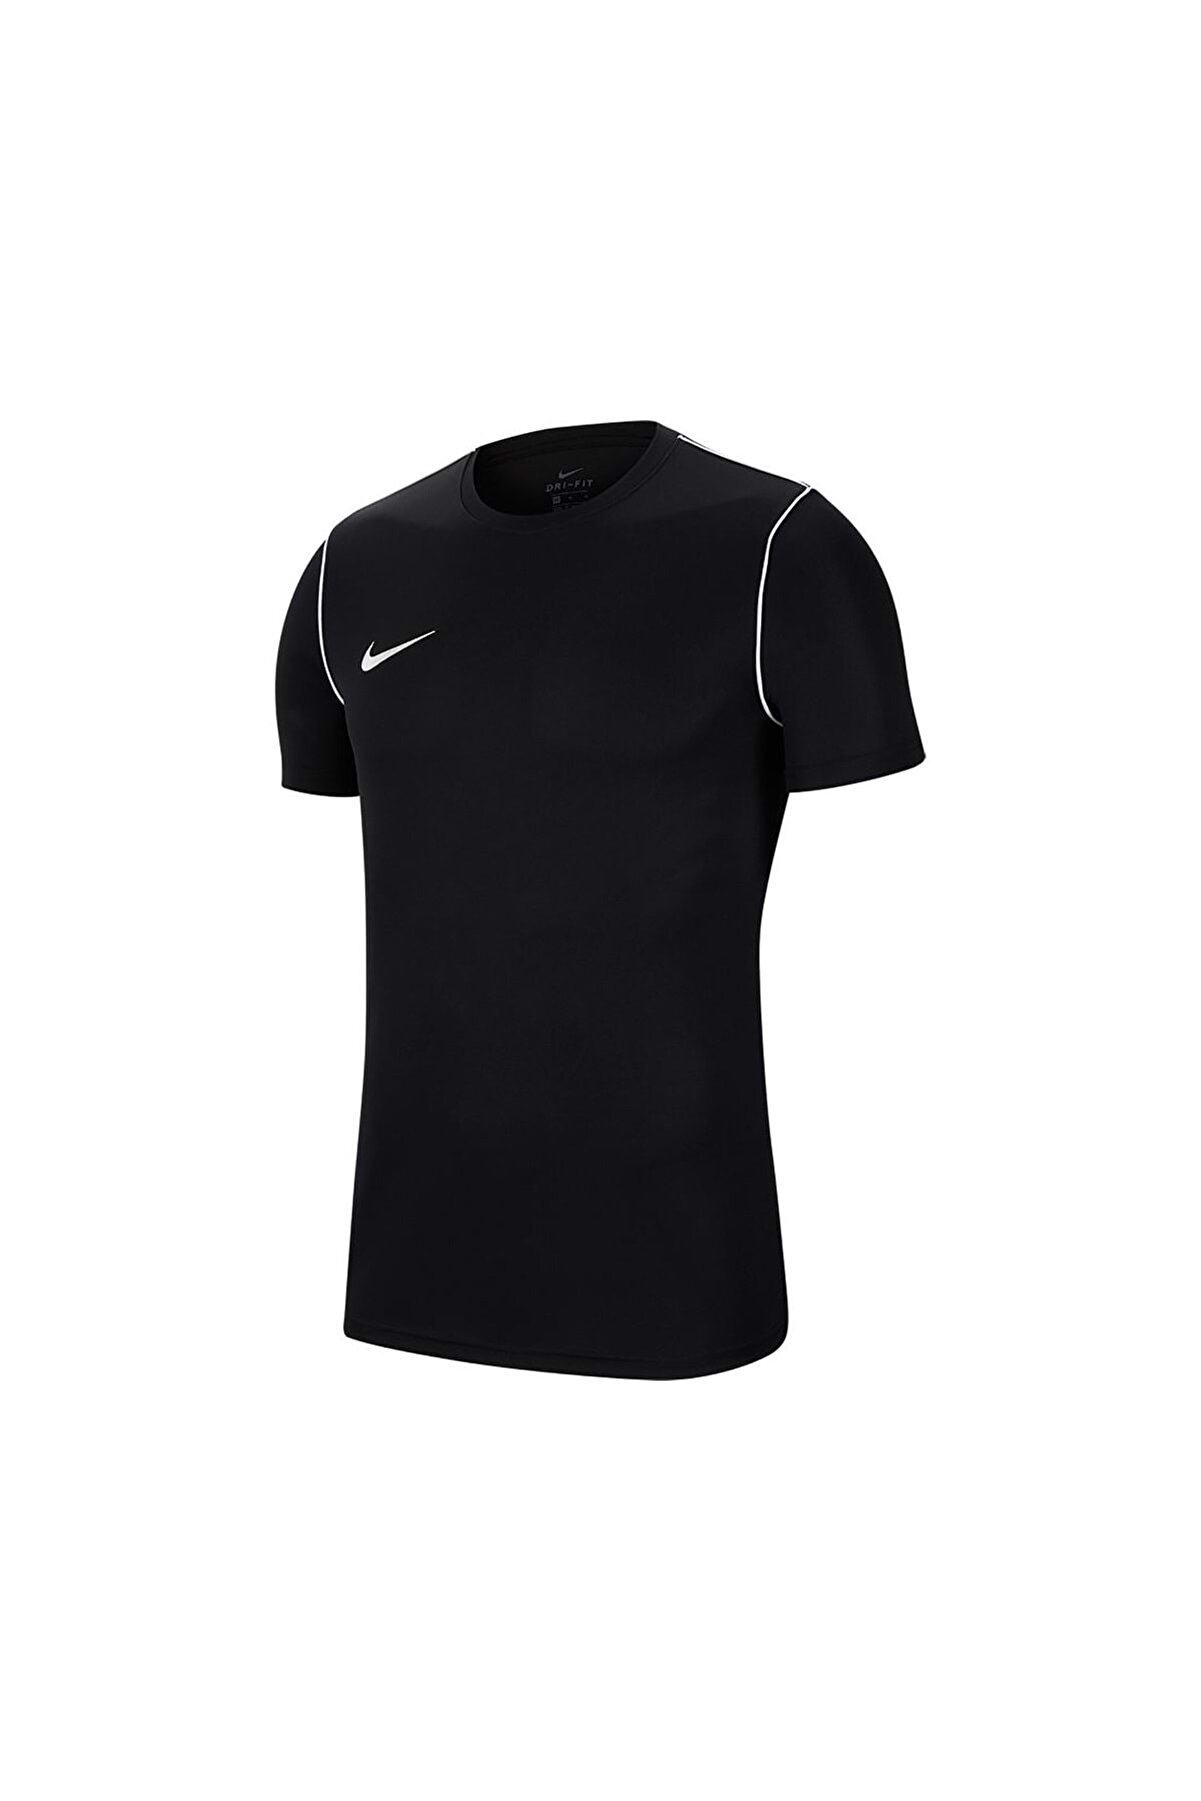 Nike Bv6883-010 Dri-fit Park Polo Tişört Erkek Futbol Forması Siyah